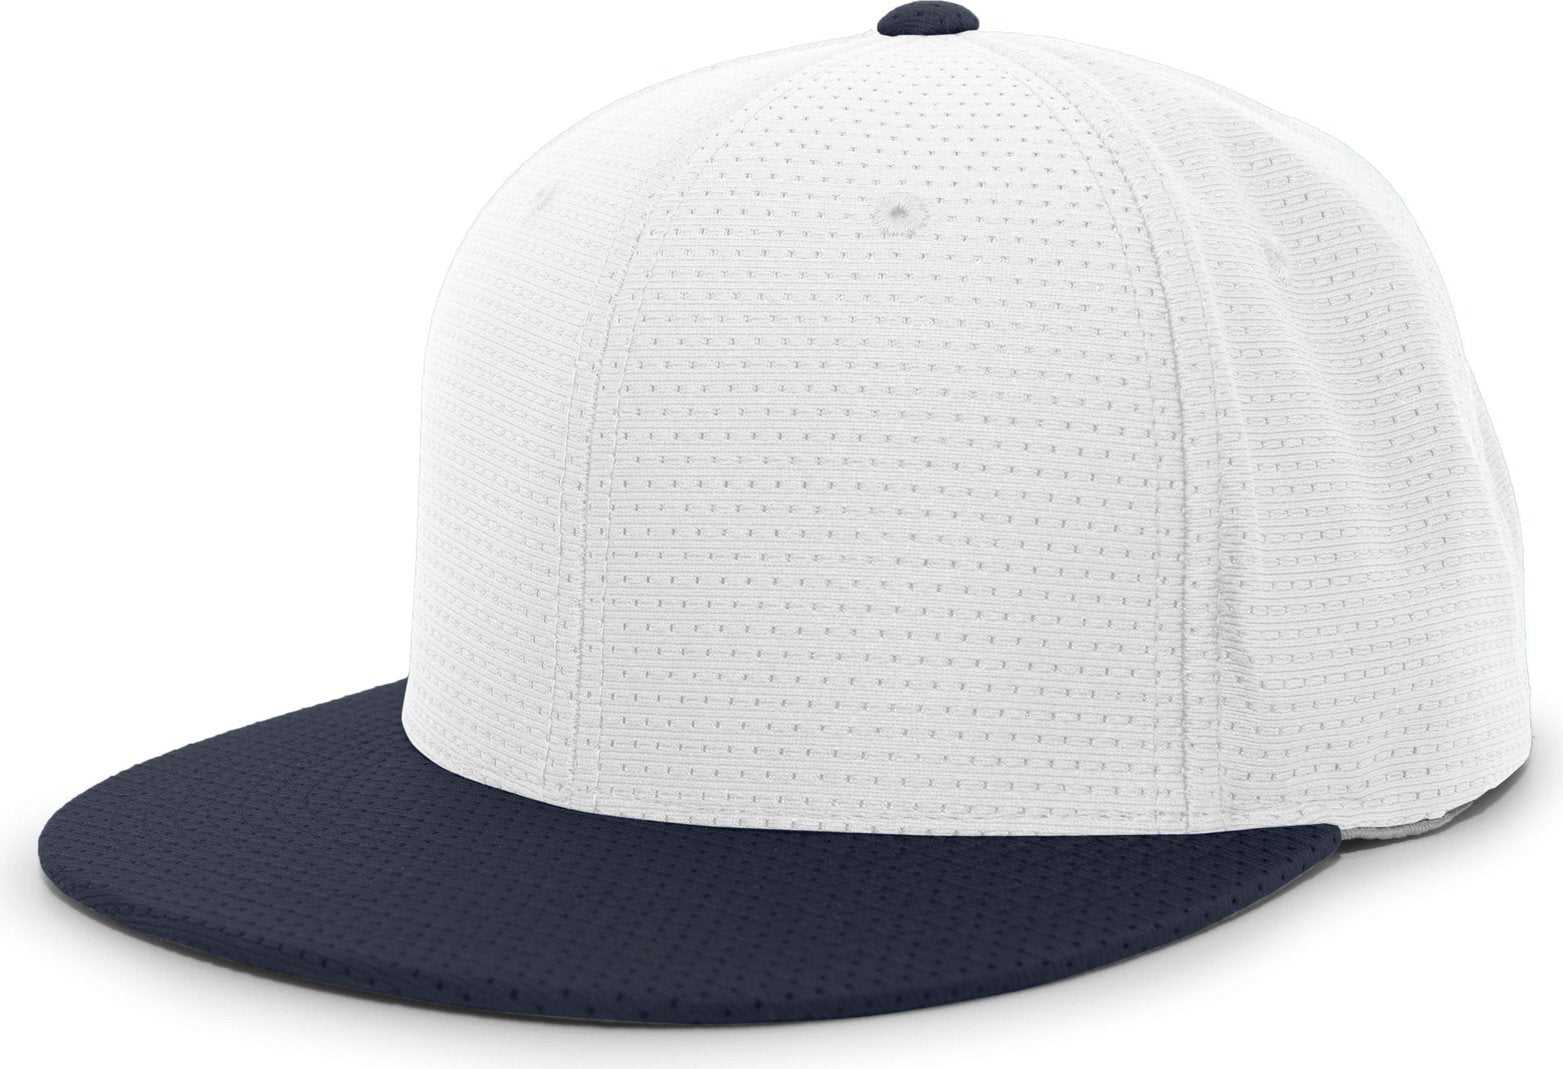 Pacific Headwear ES818 Air Jersey Performance Flexfit Cap - White Navy - HIT a Double